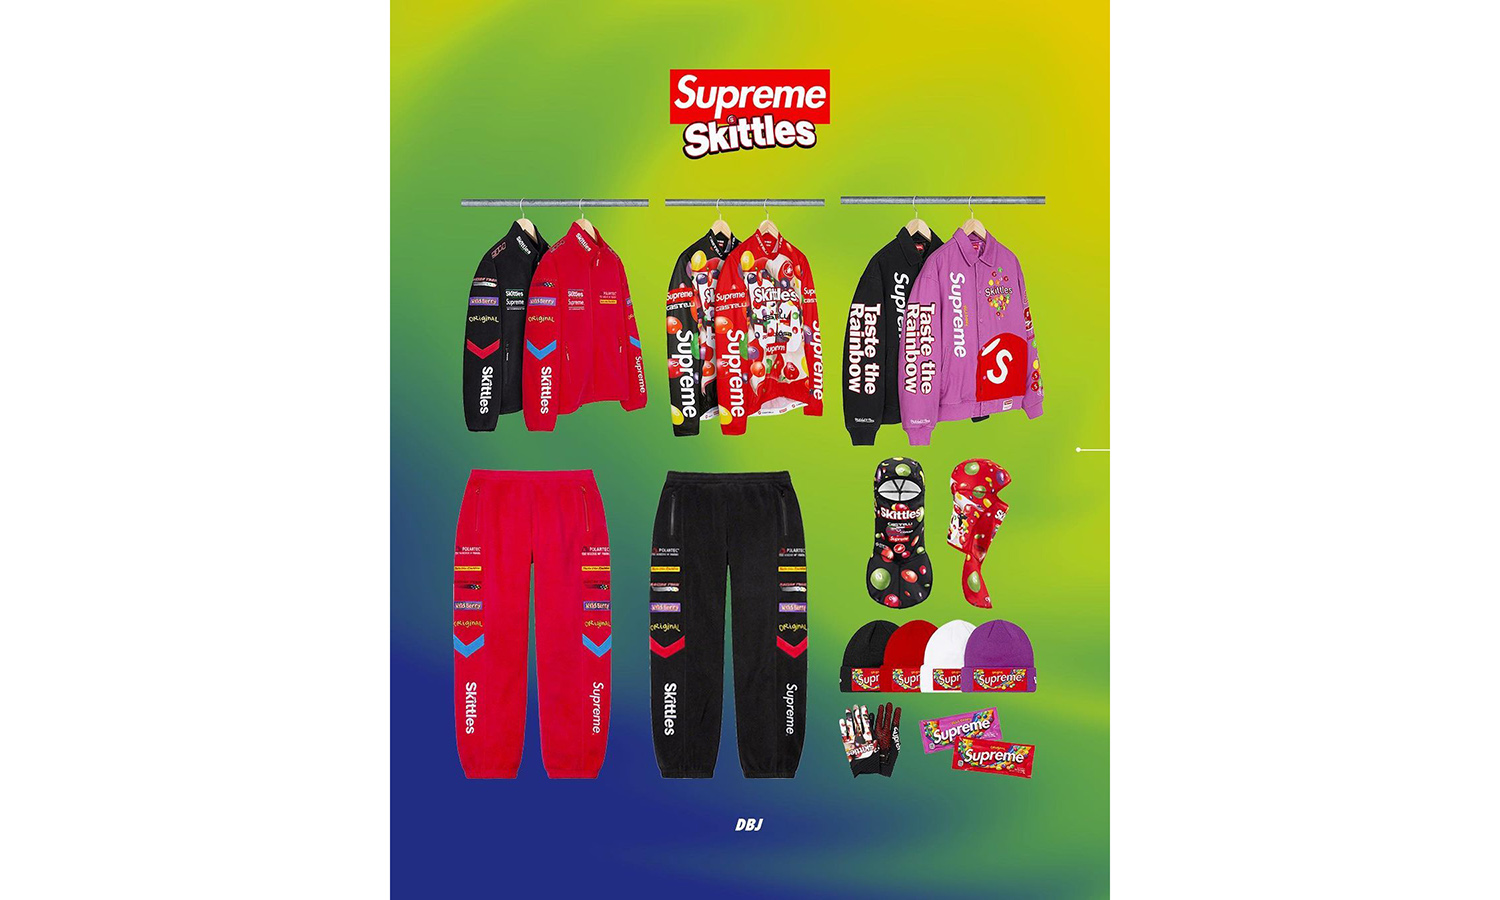 Supreme x Skittles 彩虹糖系列将在本周发售